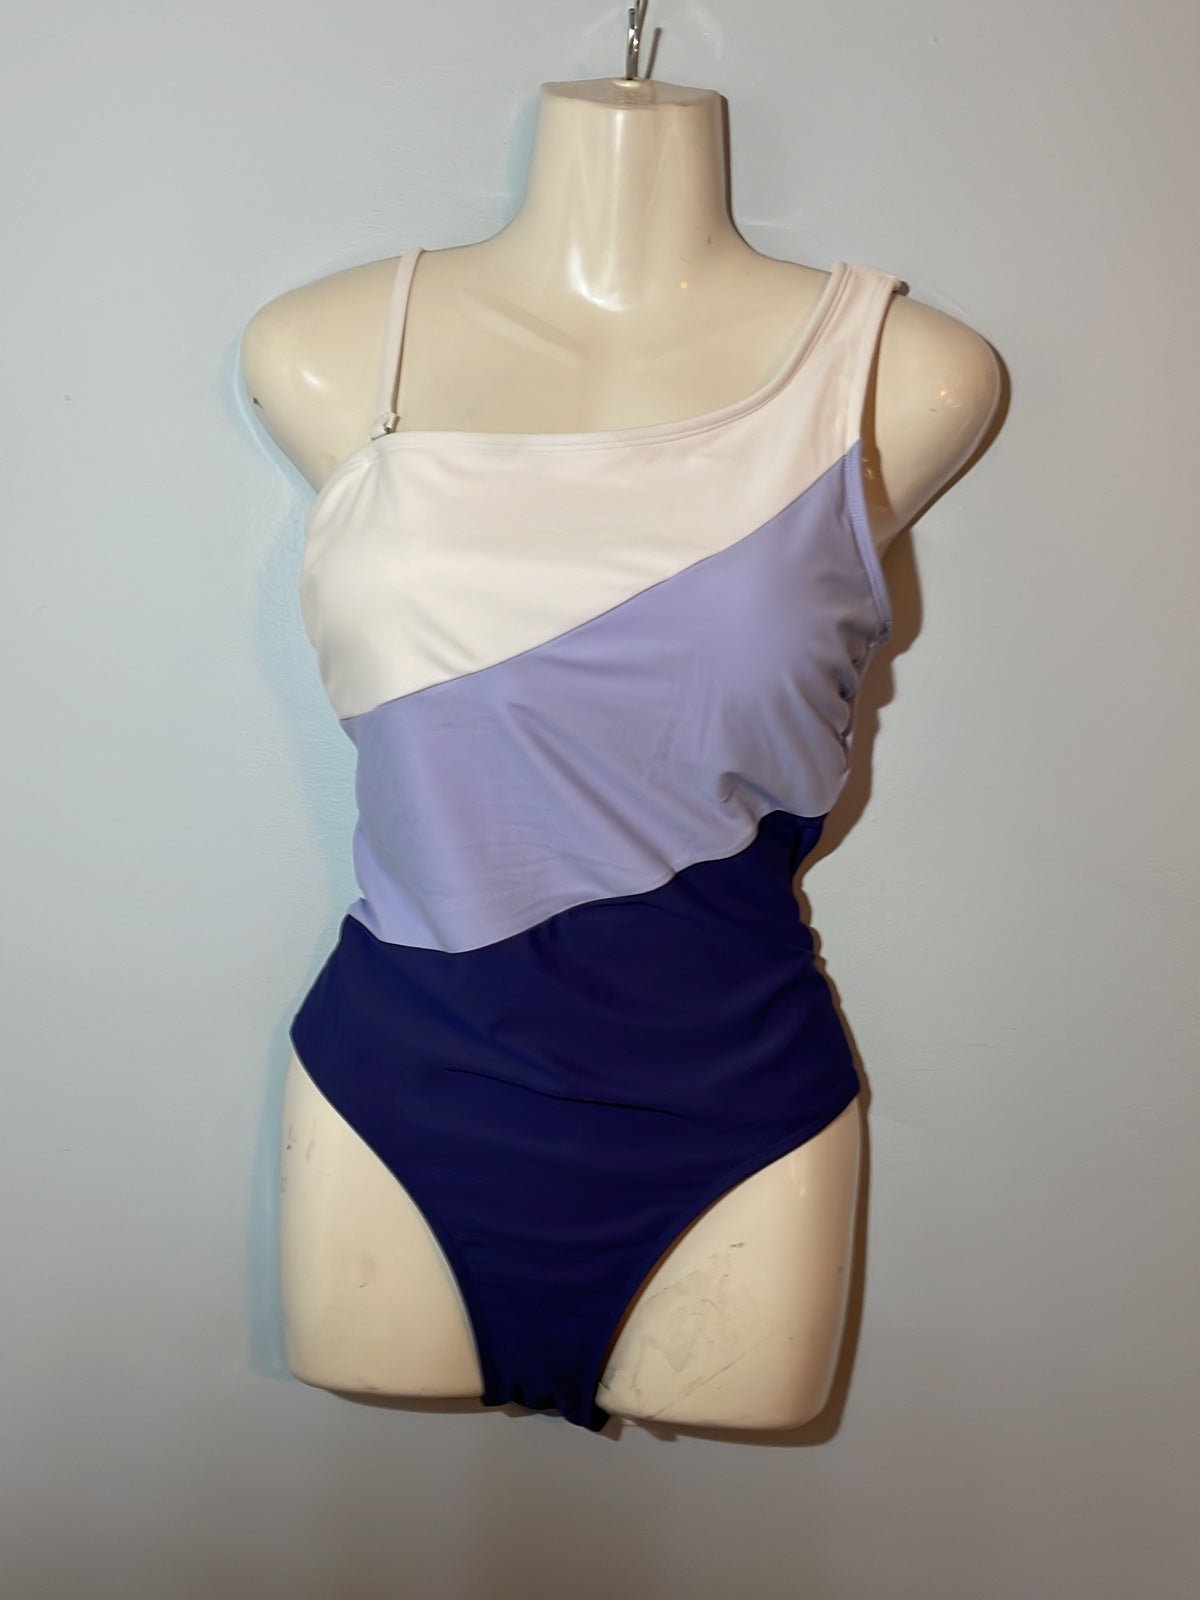 Popular CupShe Women’s Medium Purple One Piece Swimsuit mQcsbG5yN Discount